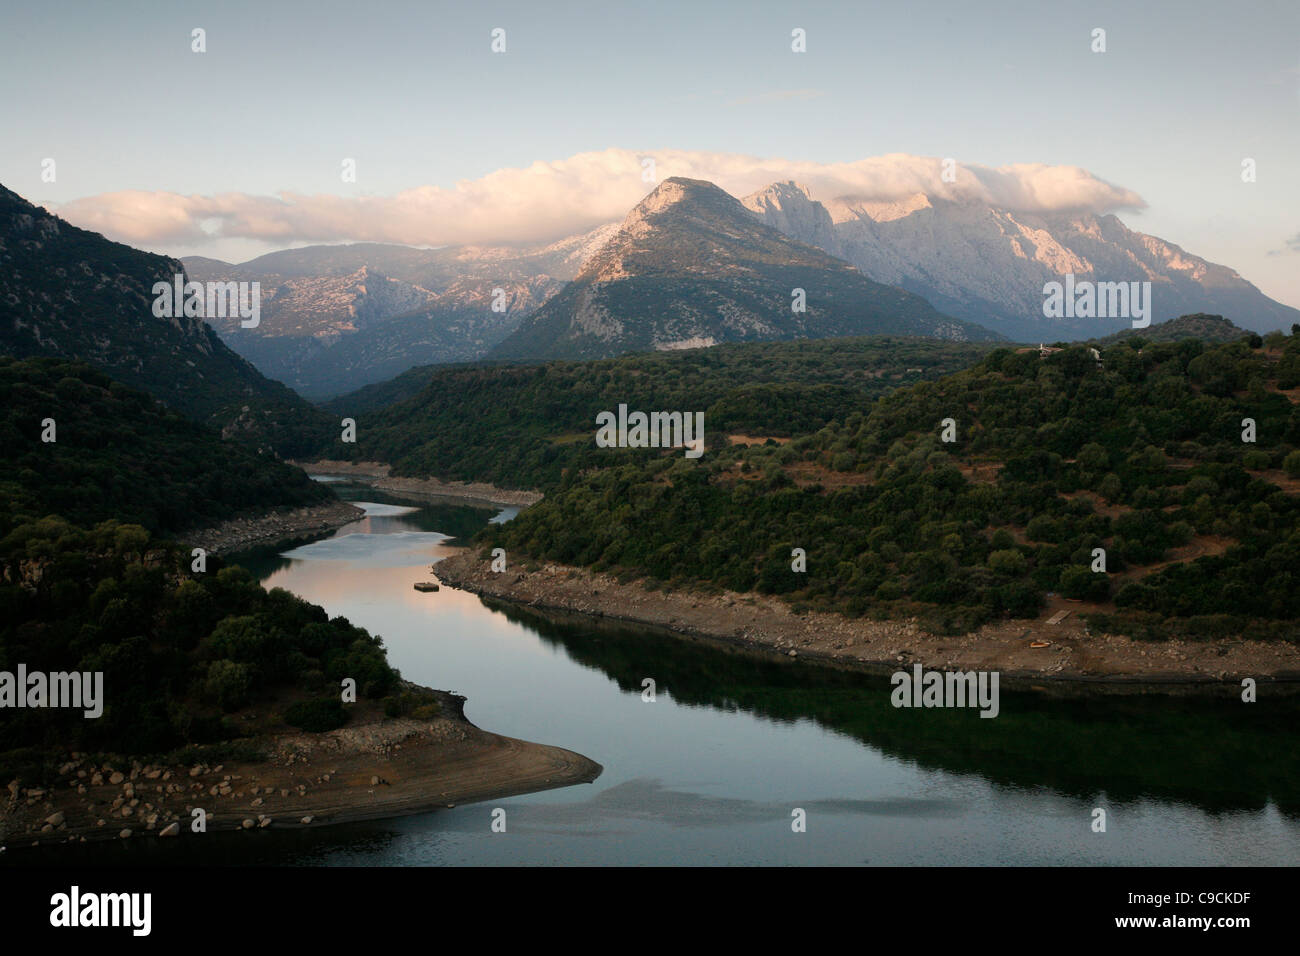 Landscape of the Supramonte mountain range and Cedrino river, Nuoro Province, Sardinia, Italy. Stock Photo